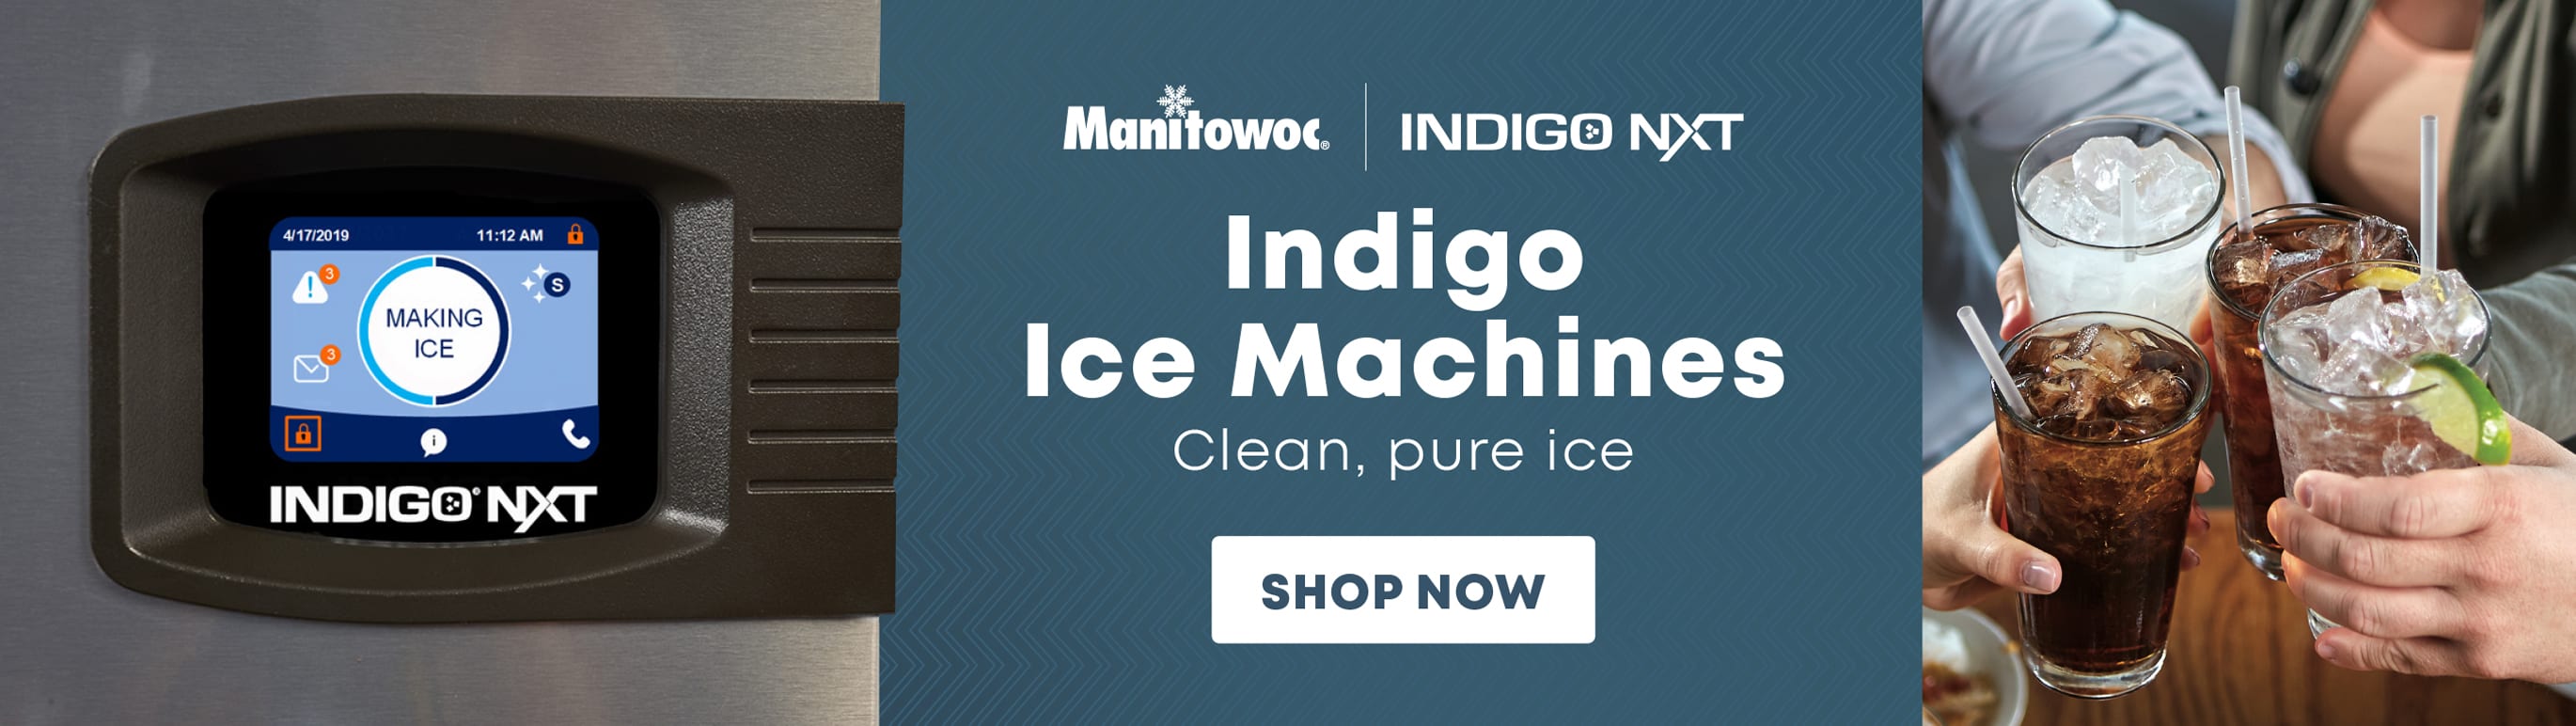 Manitowoc Indigo Ice Machines